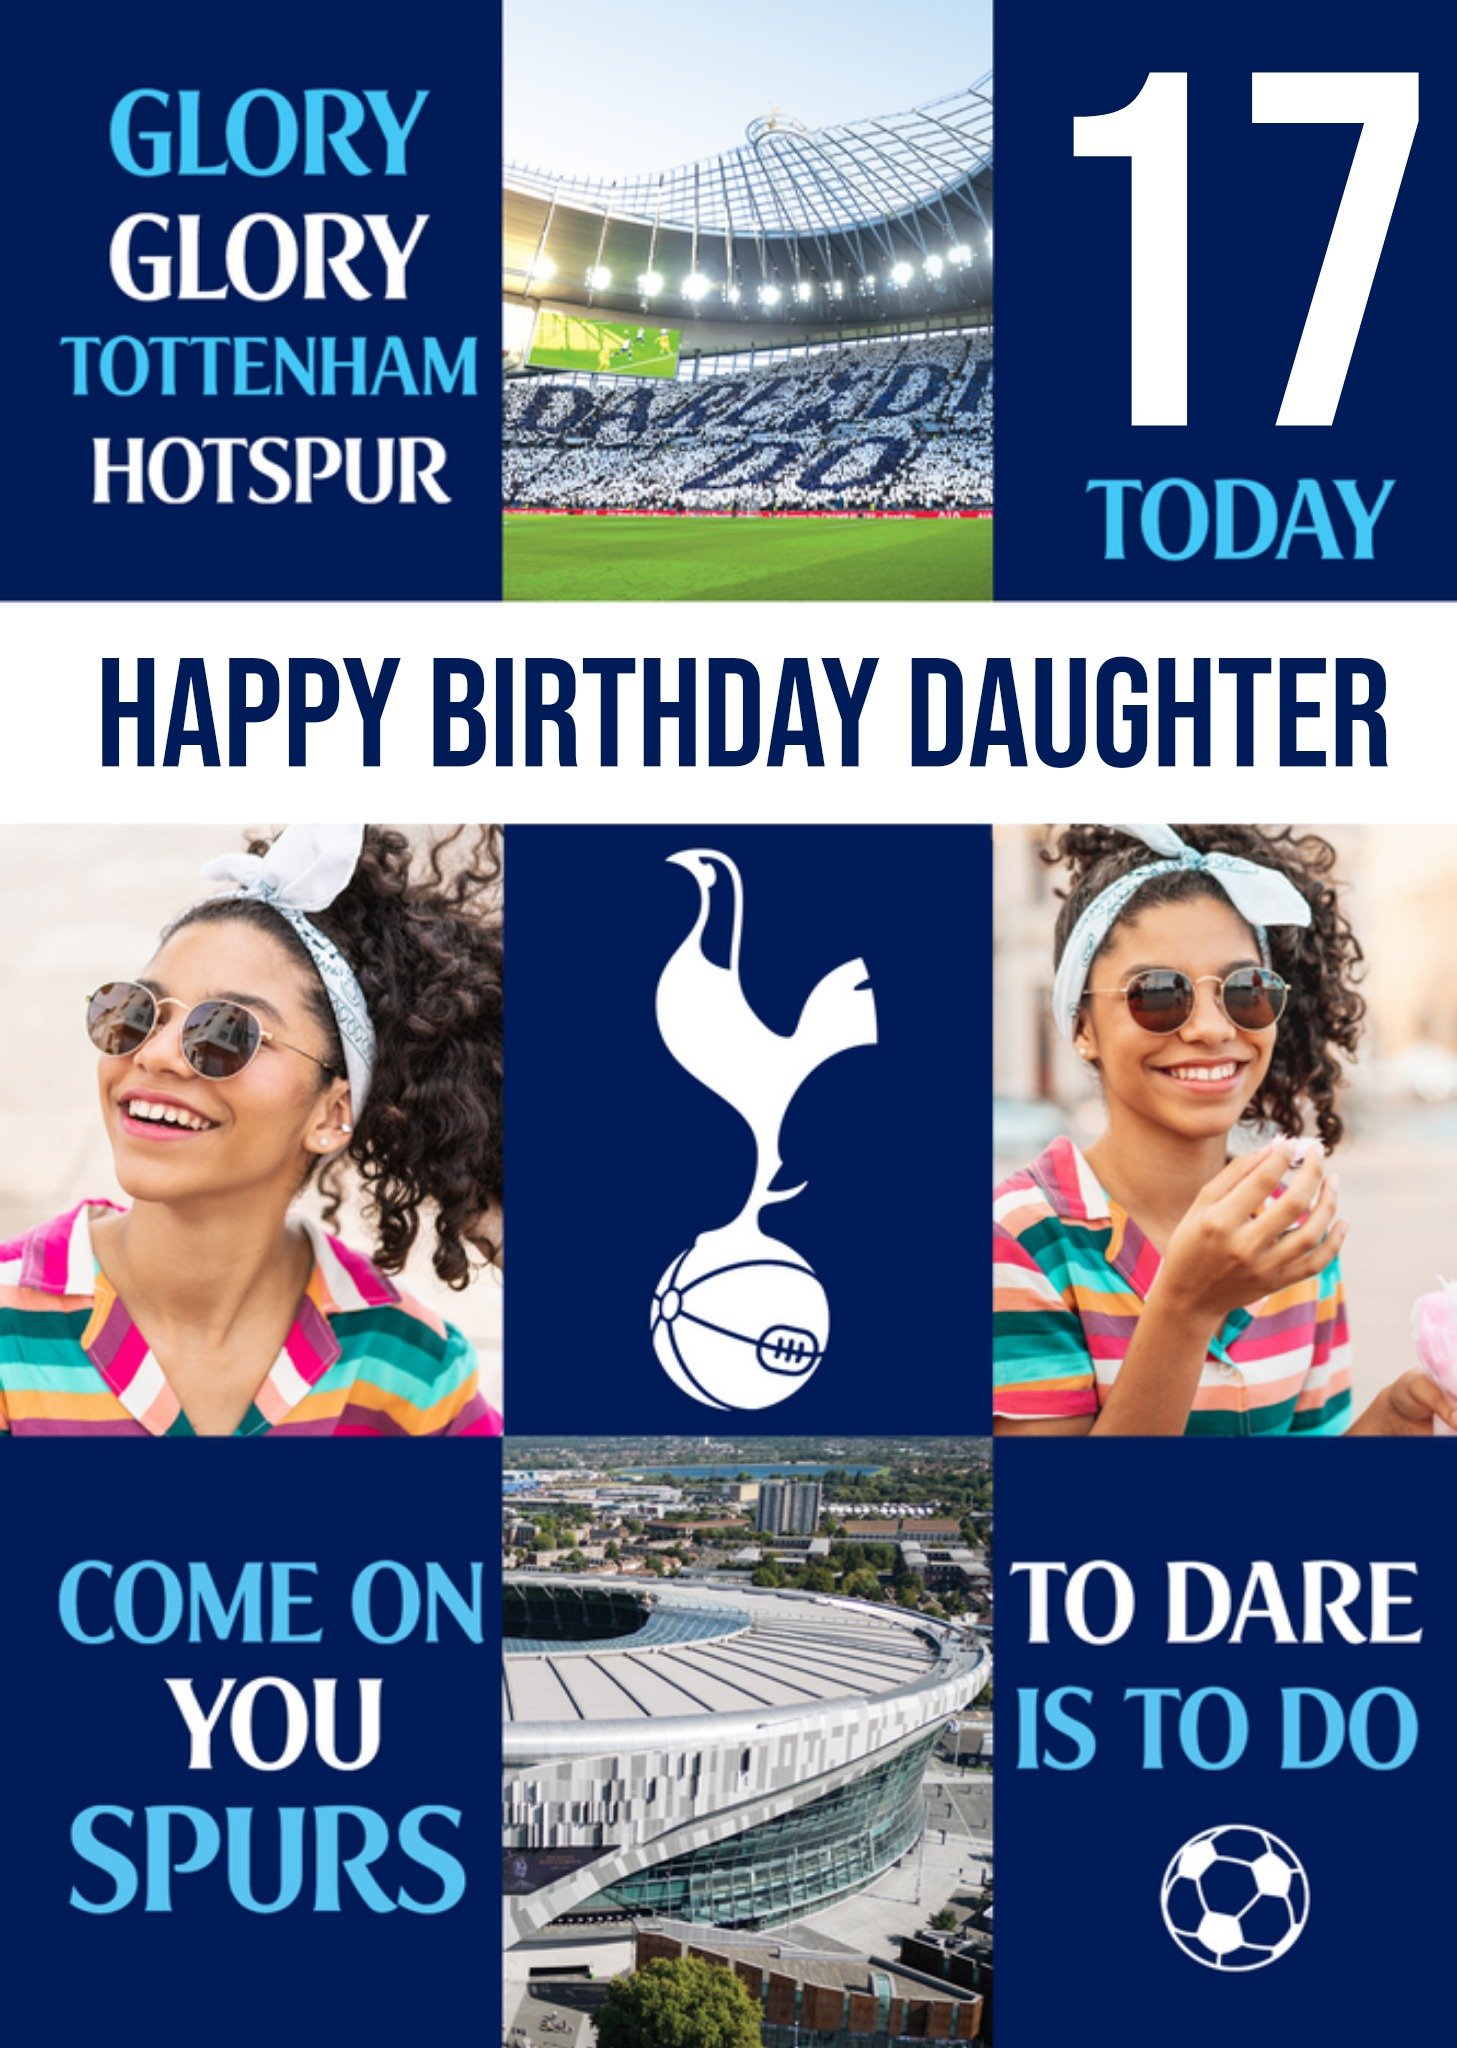 Moonpig Tottenham Hotspur Fc Photo Upload Birthday Card, Large